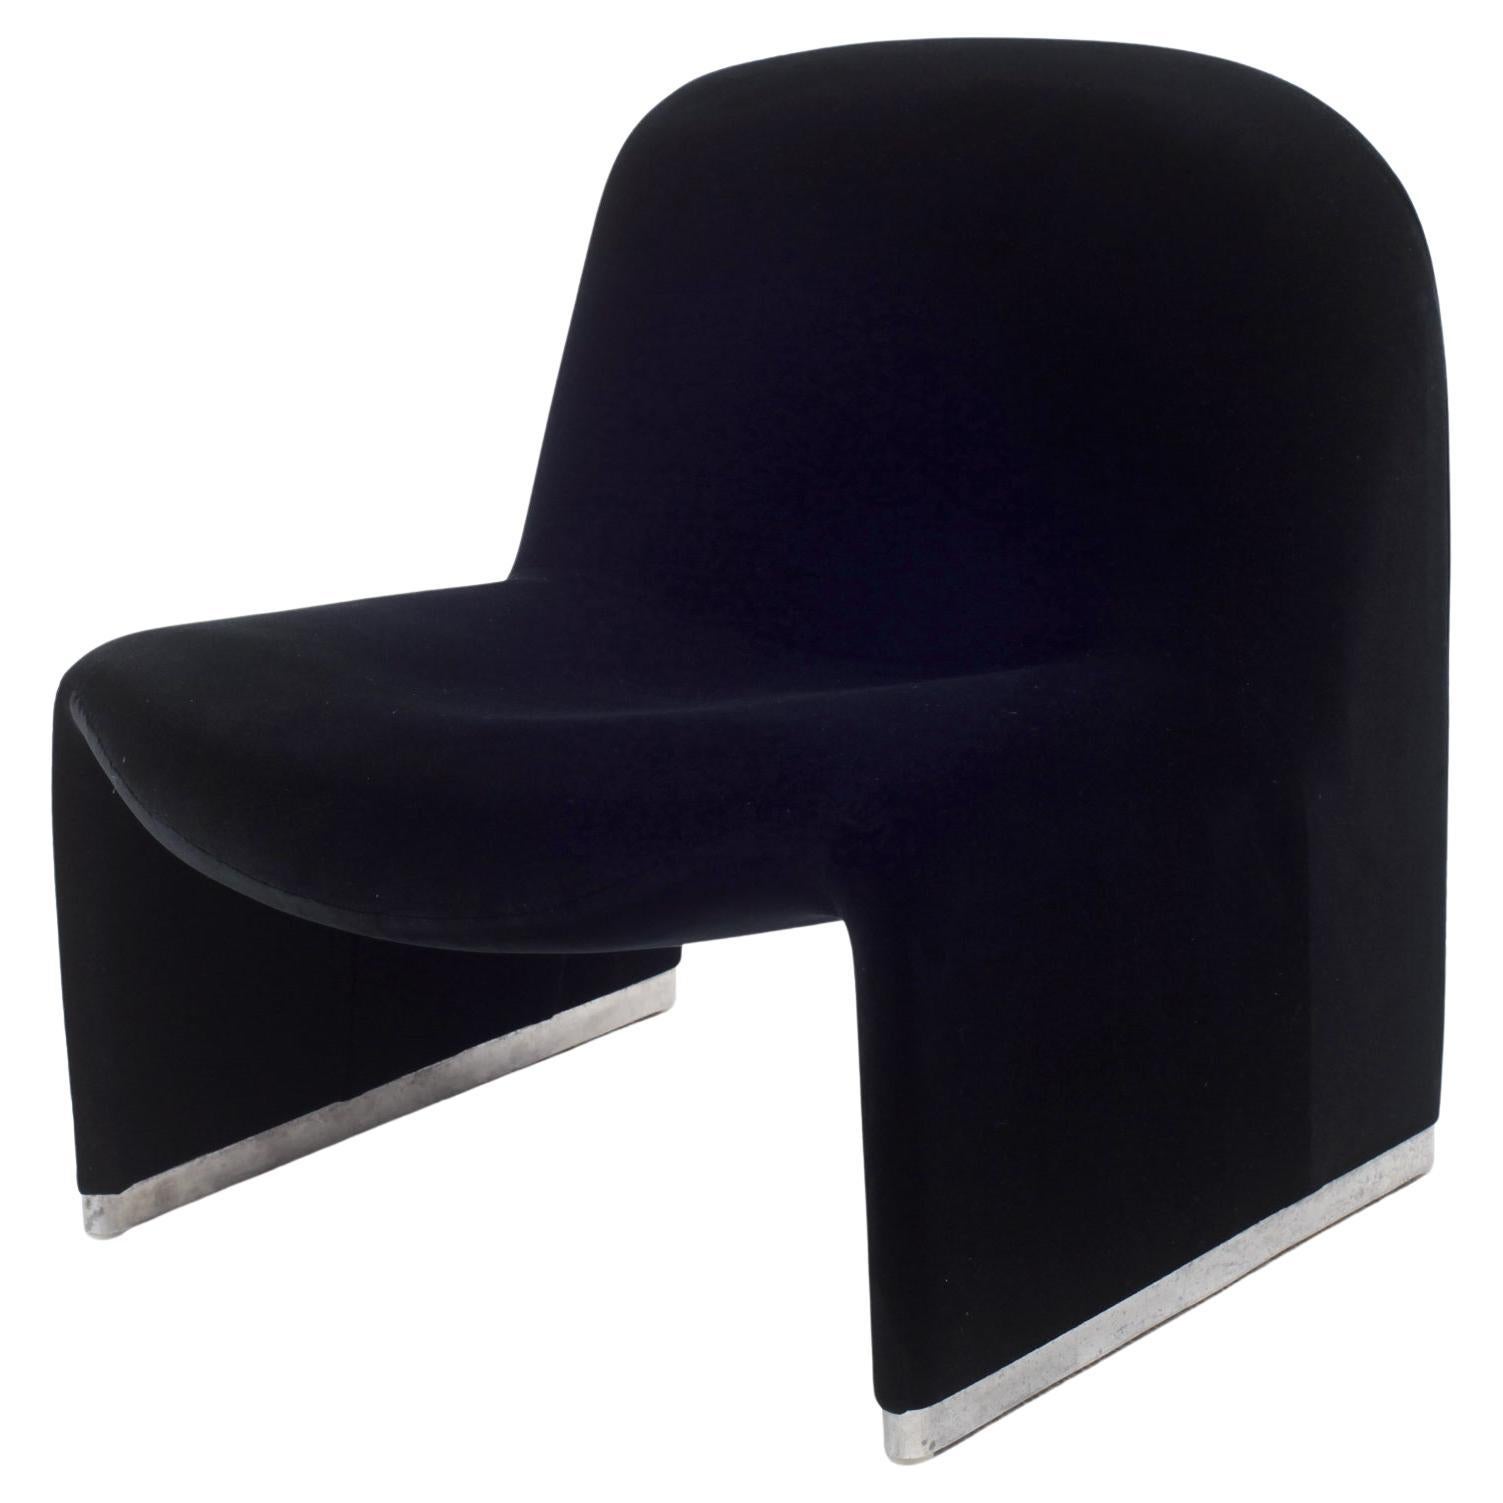 Giancarlo Piretti “Alky” Chair in New Black Velvet, for Castelli Italy, 1970s